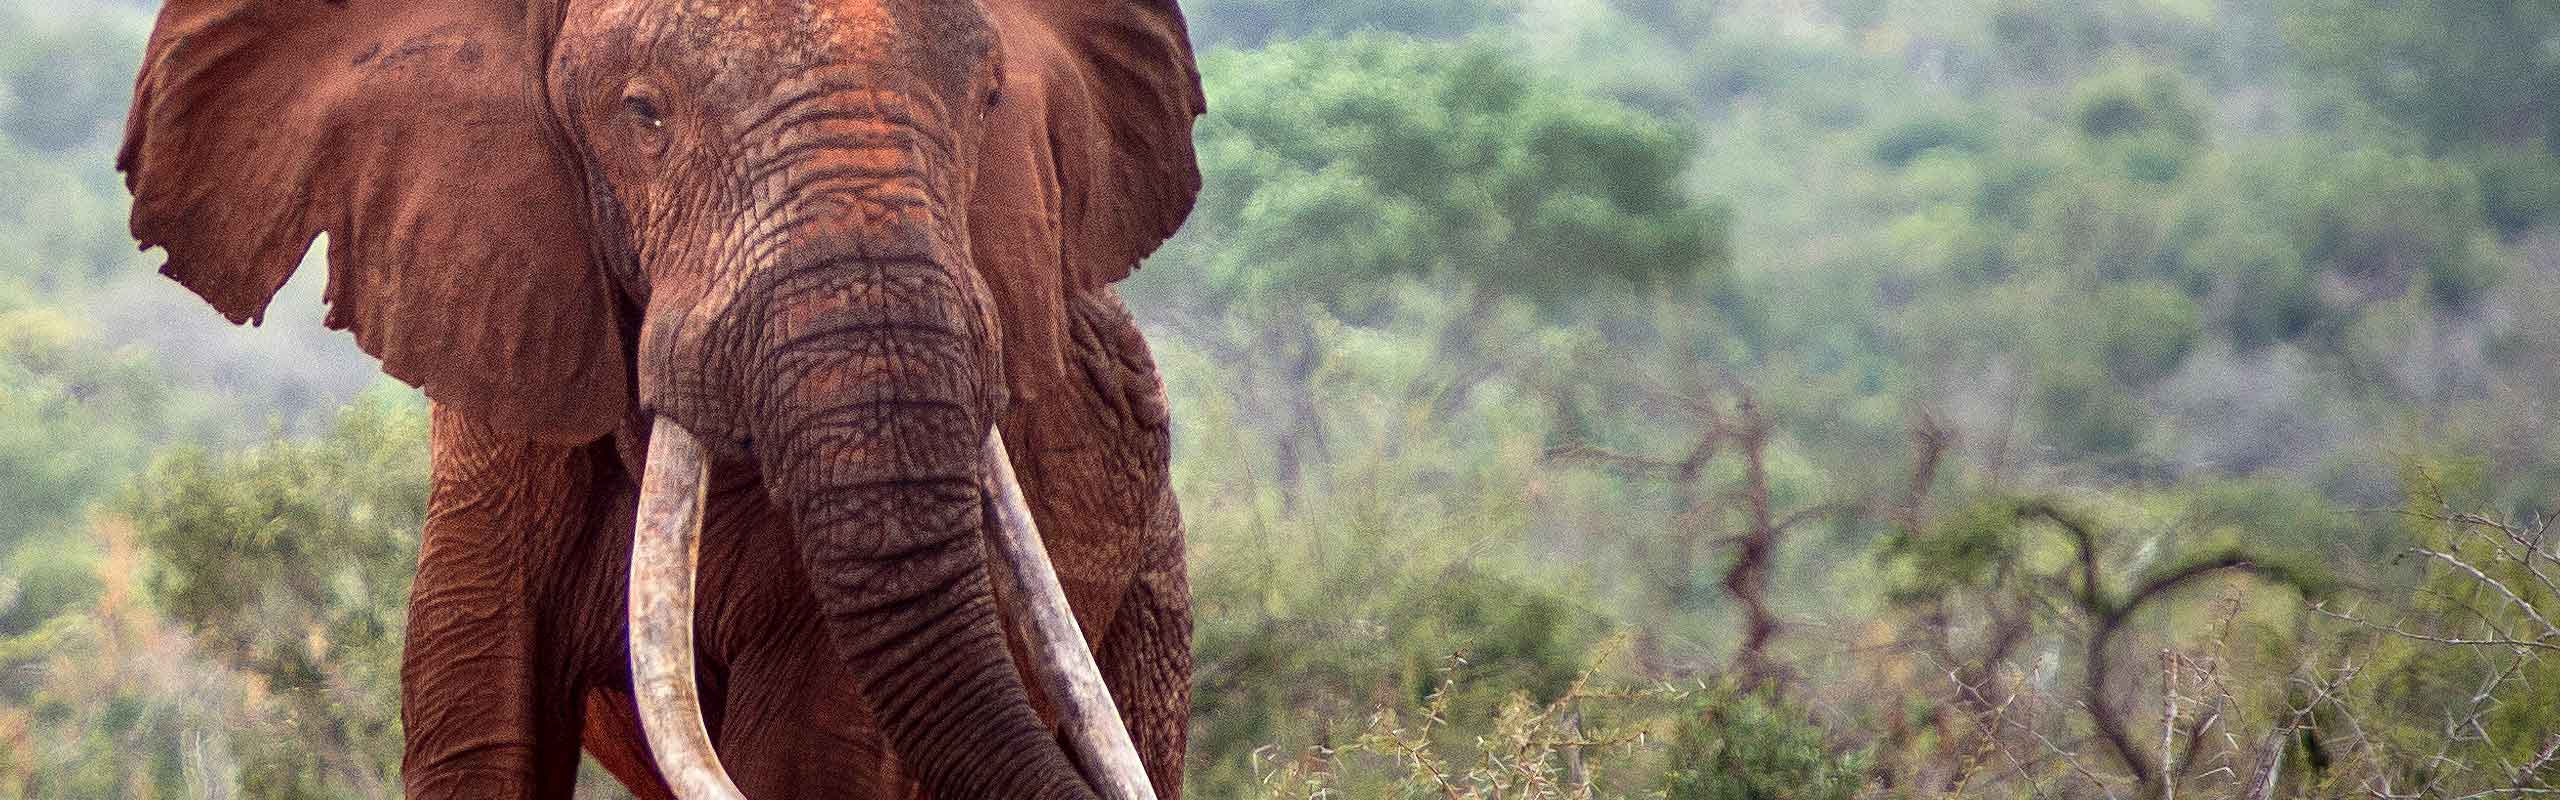 Large bull red elephant in Tsavo, Kenya | © Ranger Campus | Photo by Cees Baardman 2017